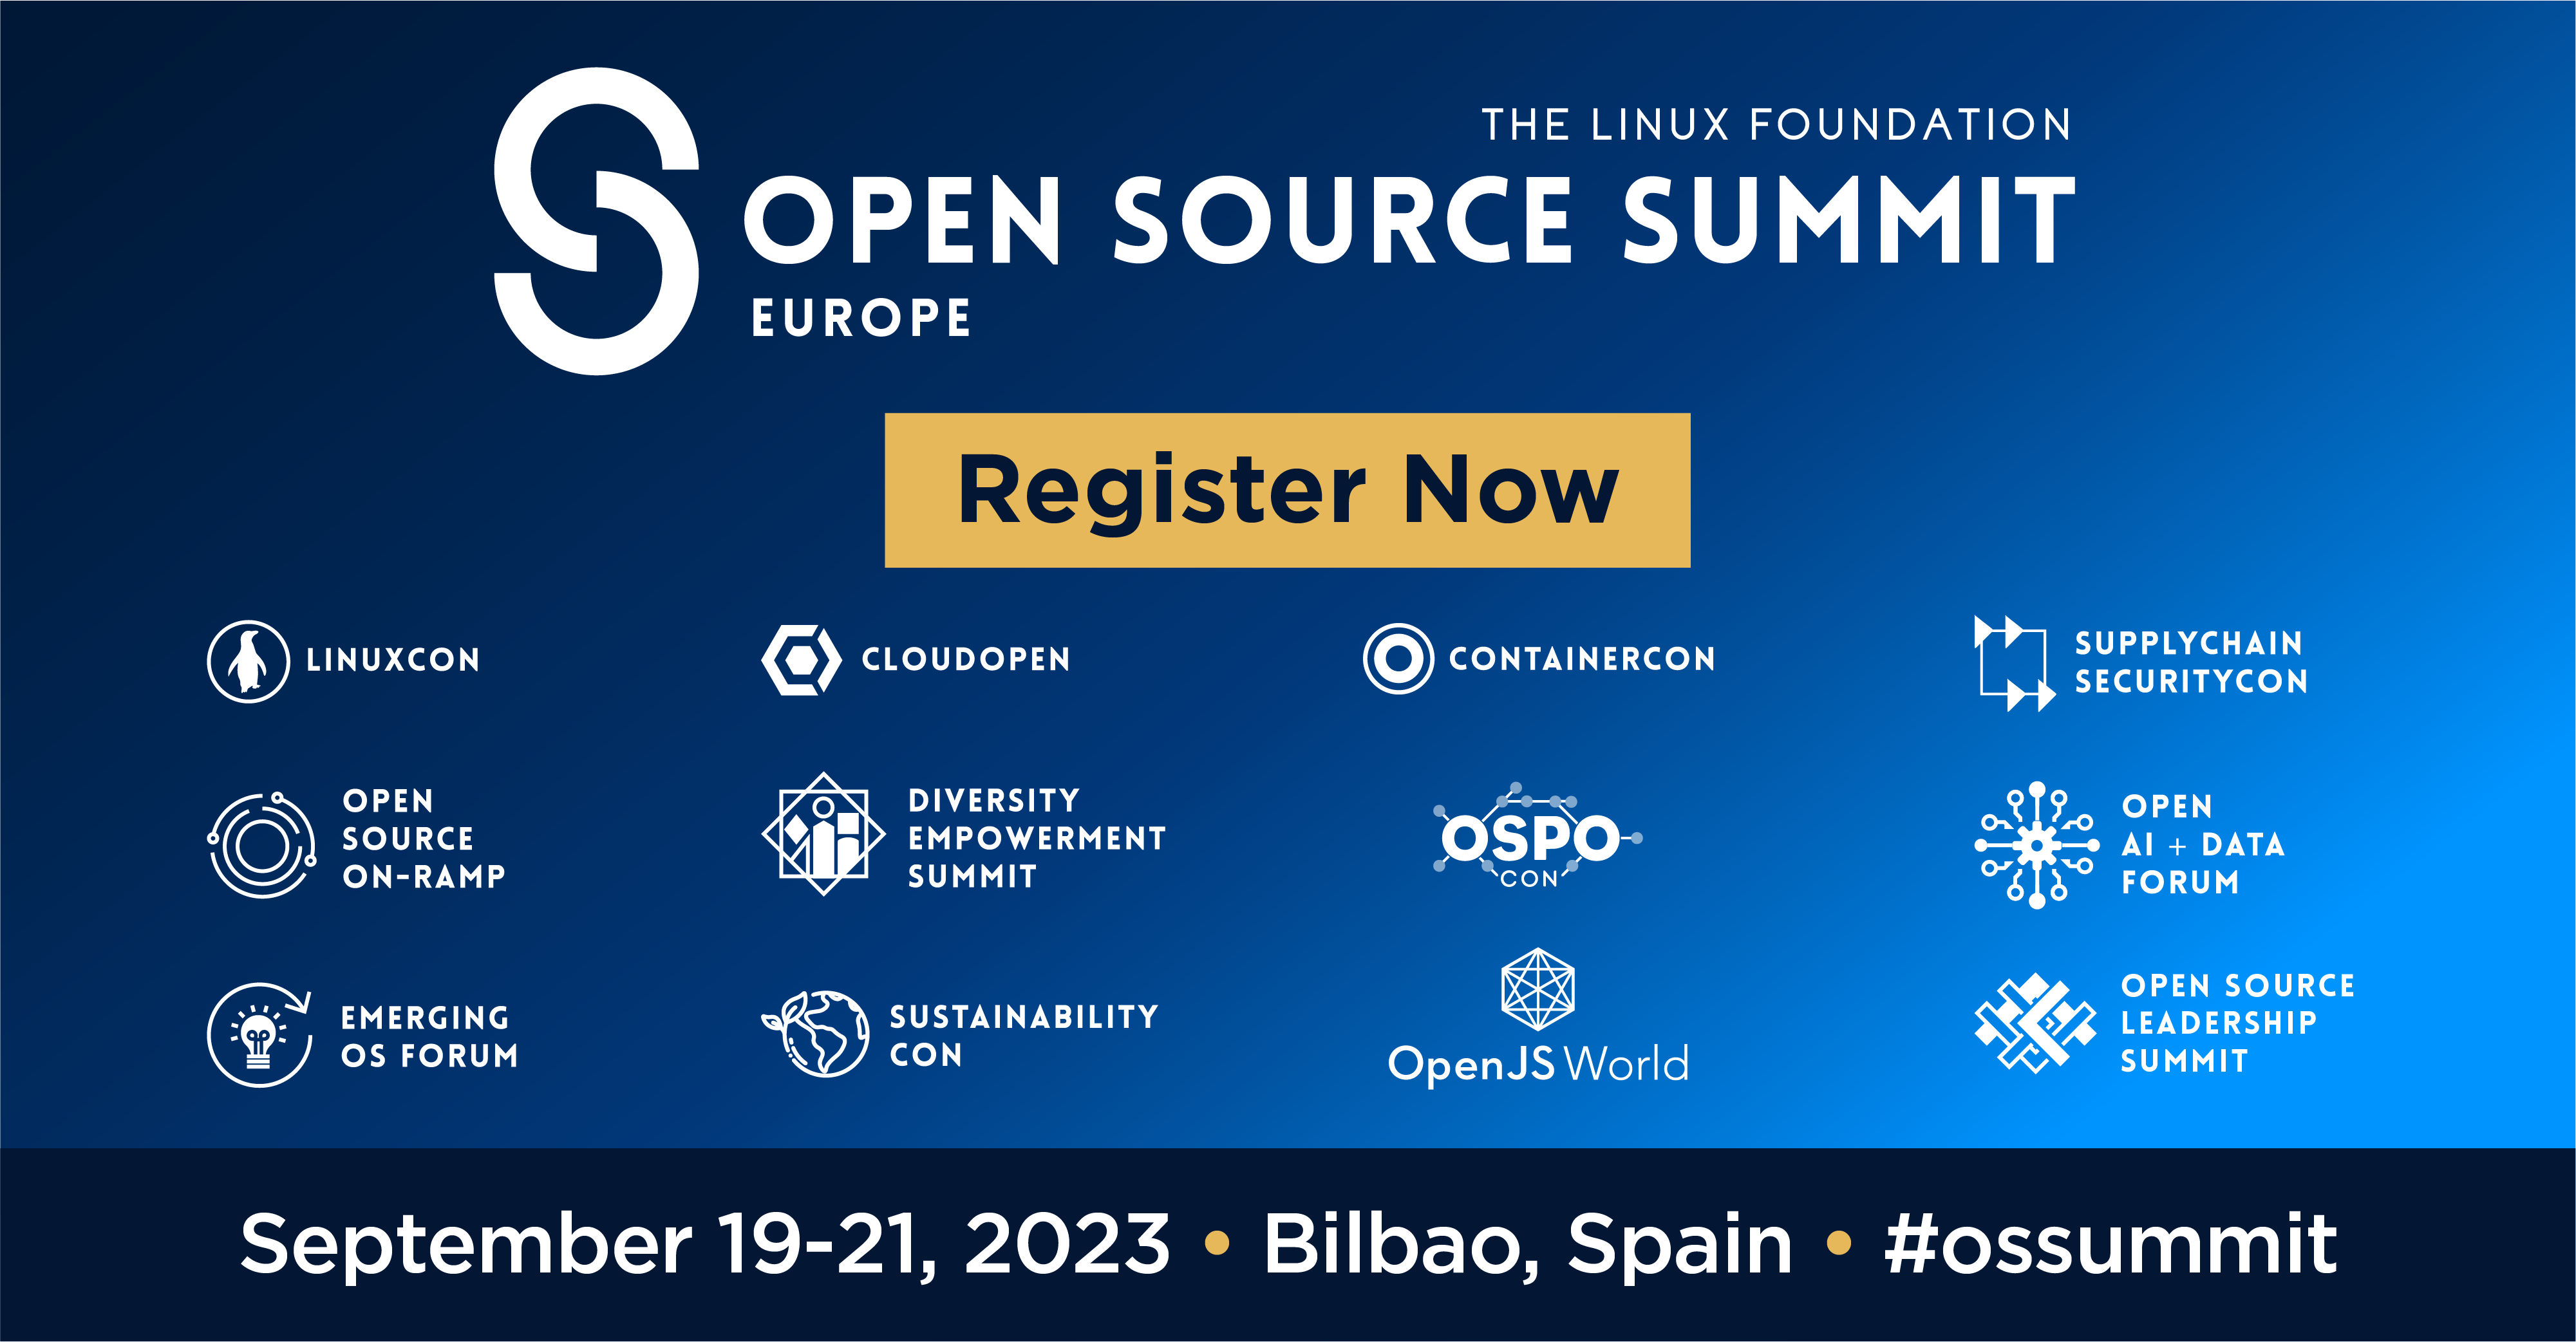 Register now for Open Source Summit Europe, September 19-21 in Bilbao, Spain. 